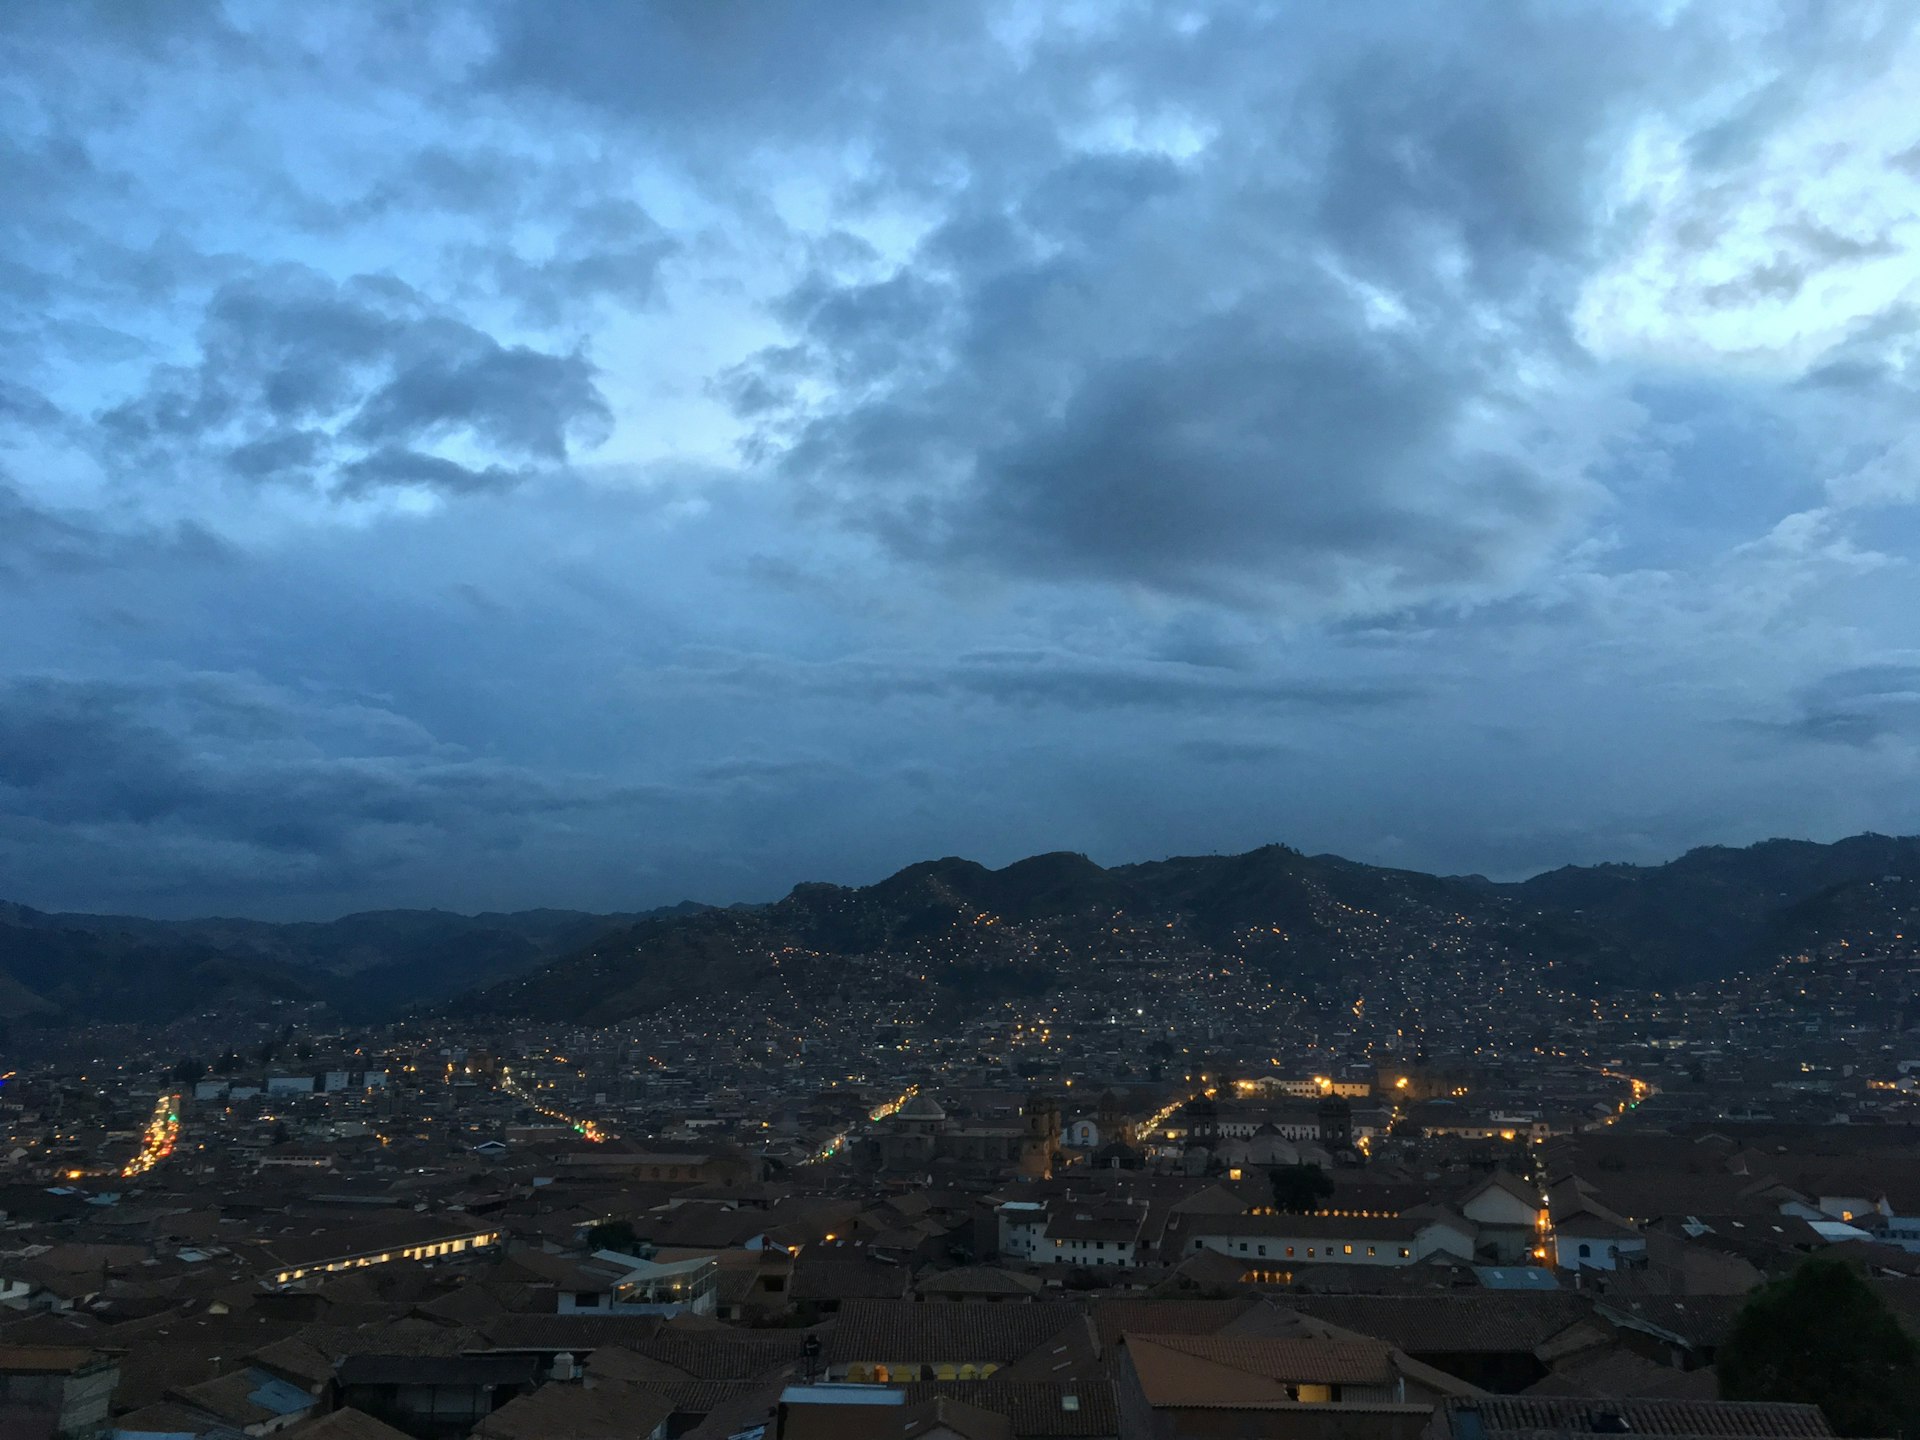 Cuzco lit up at night